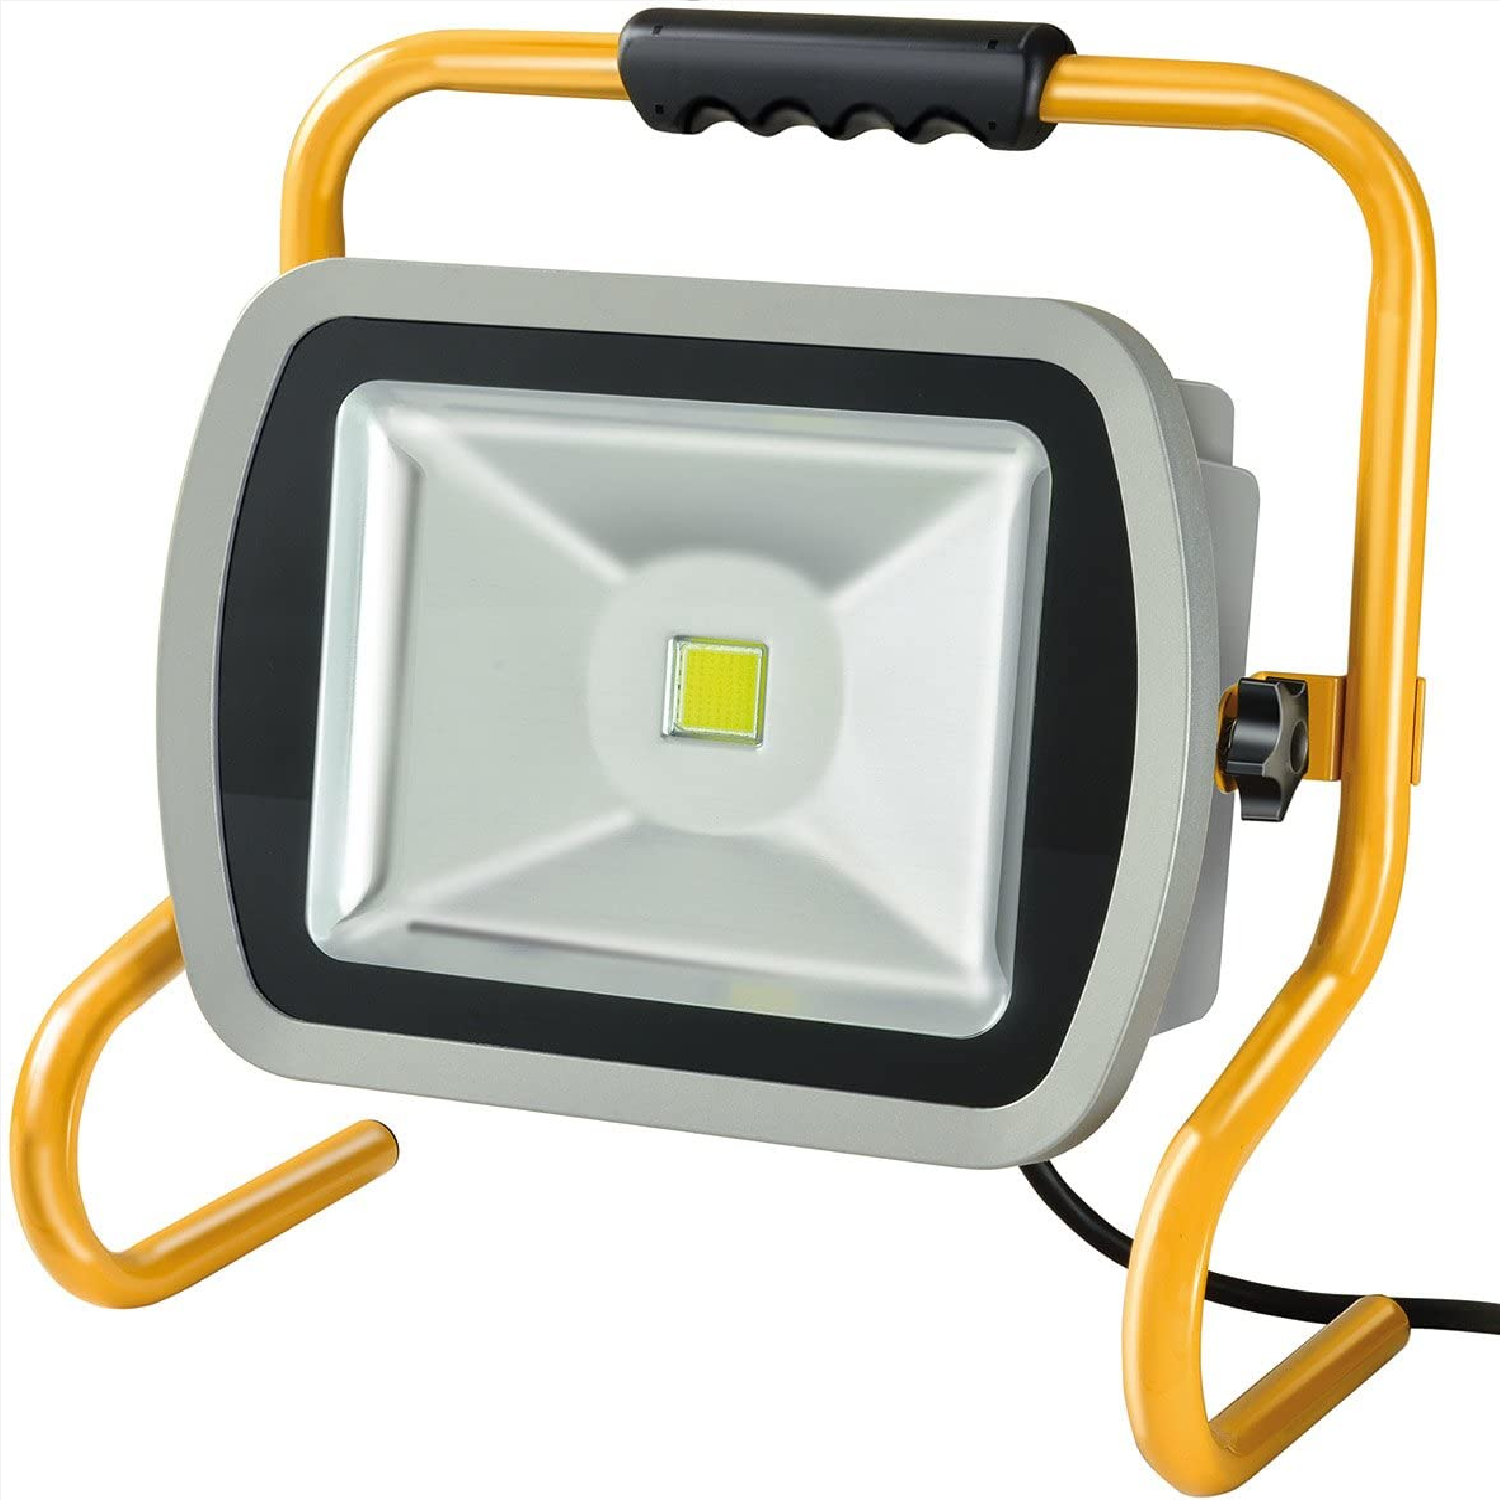 Brennenstuhl Mobile Chip-LED-Leuchte / LED Strahler innen und außen (Außenstrahler 20 Watt, Baustrahler IP65, LED Fluter Tageslicht) [Energieklasse A+]